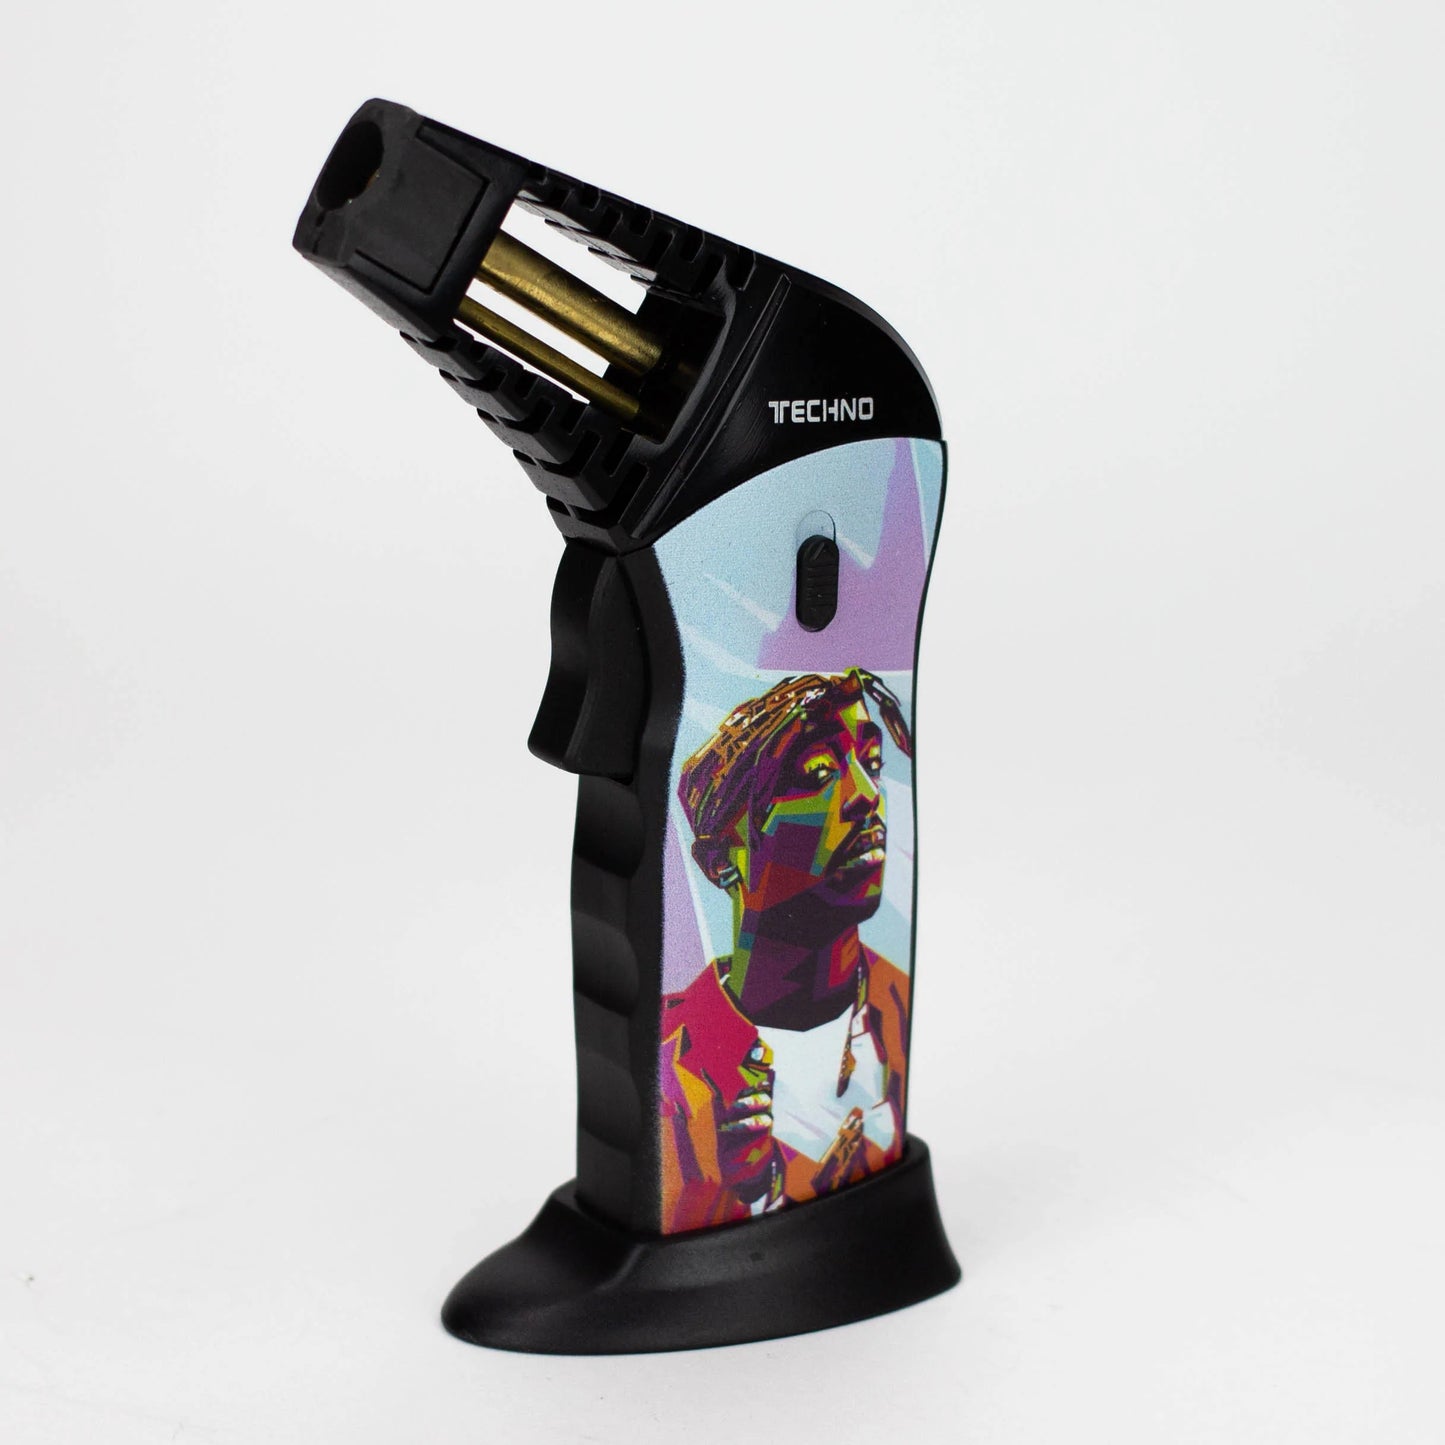 Techno | Adjustable Single Jet slant Torch Lighter in gift box [15811]_9